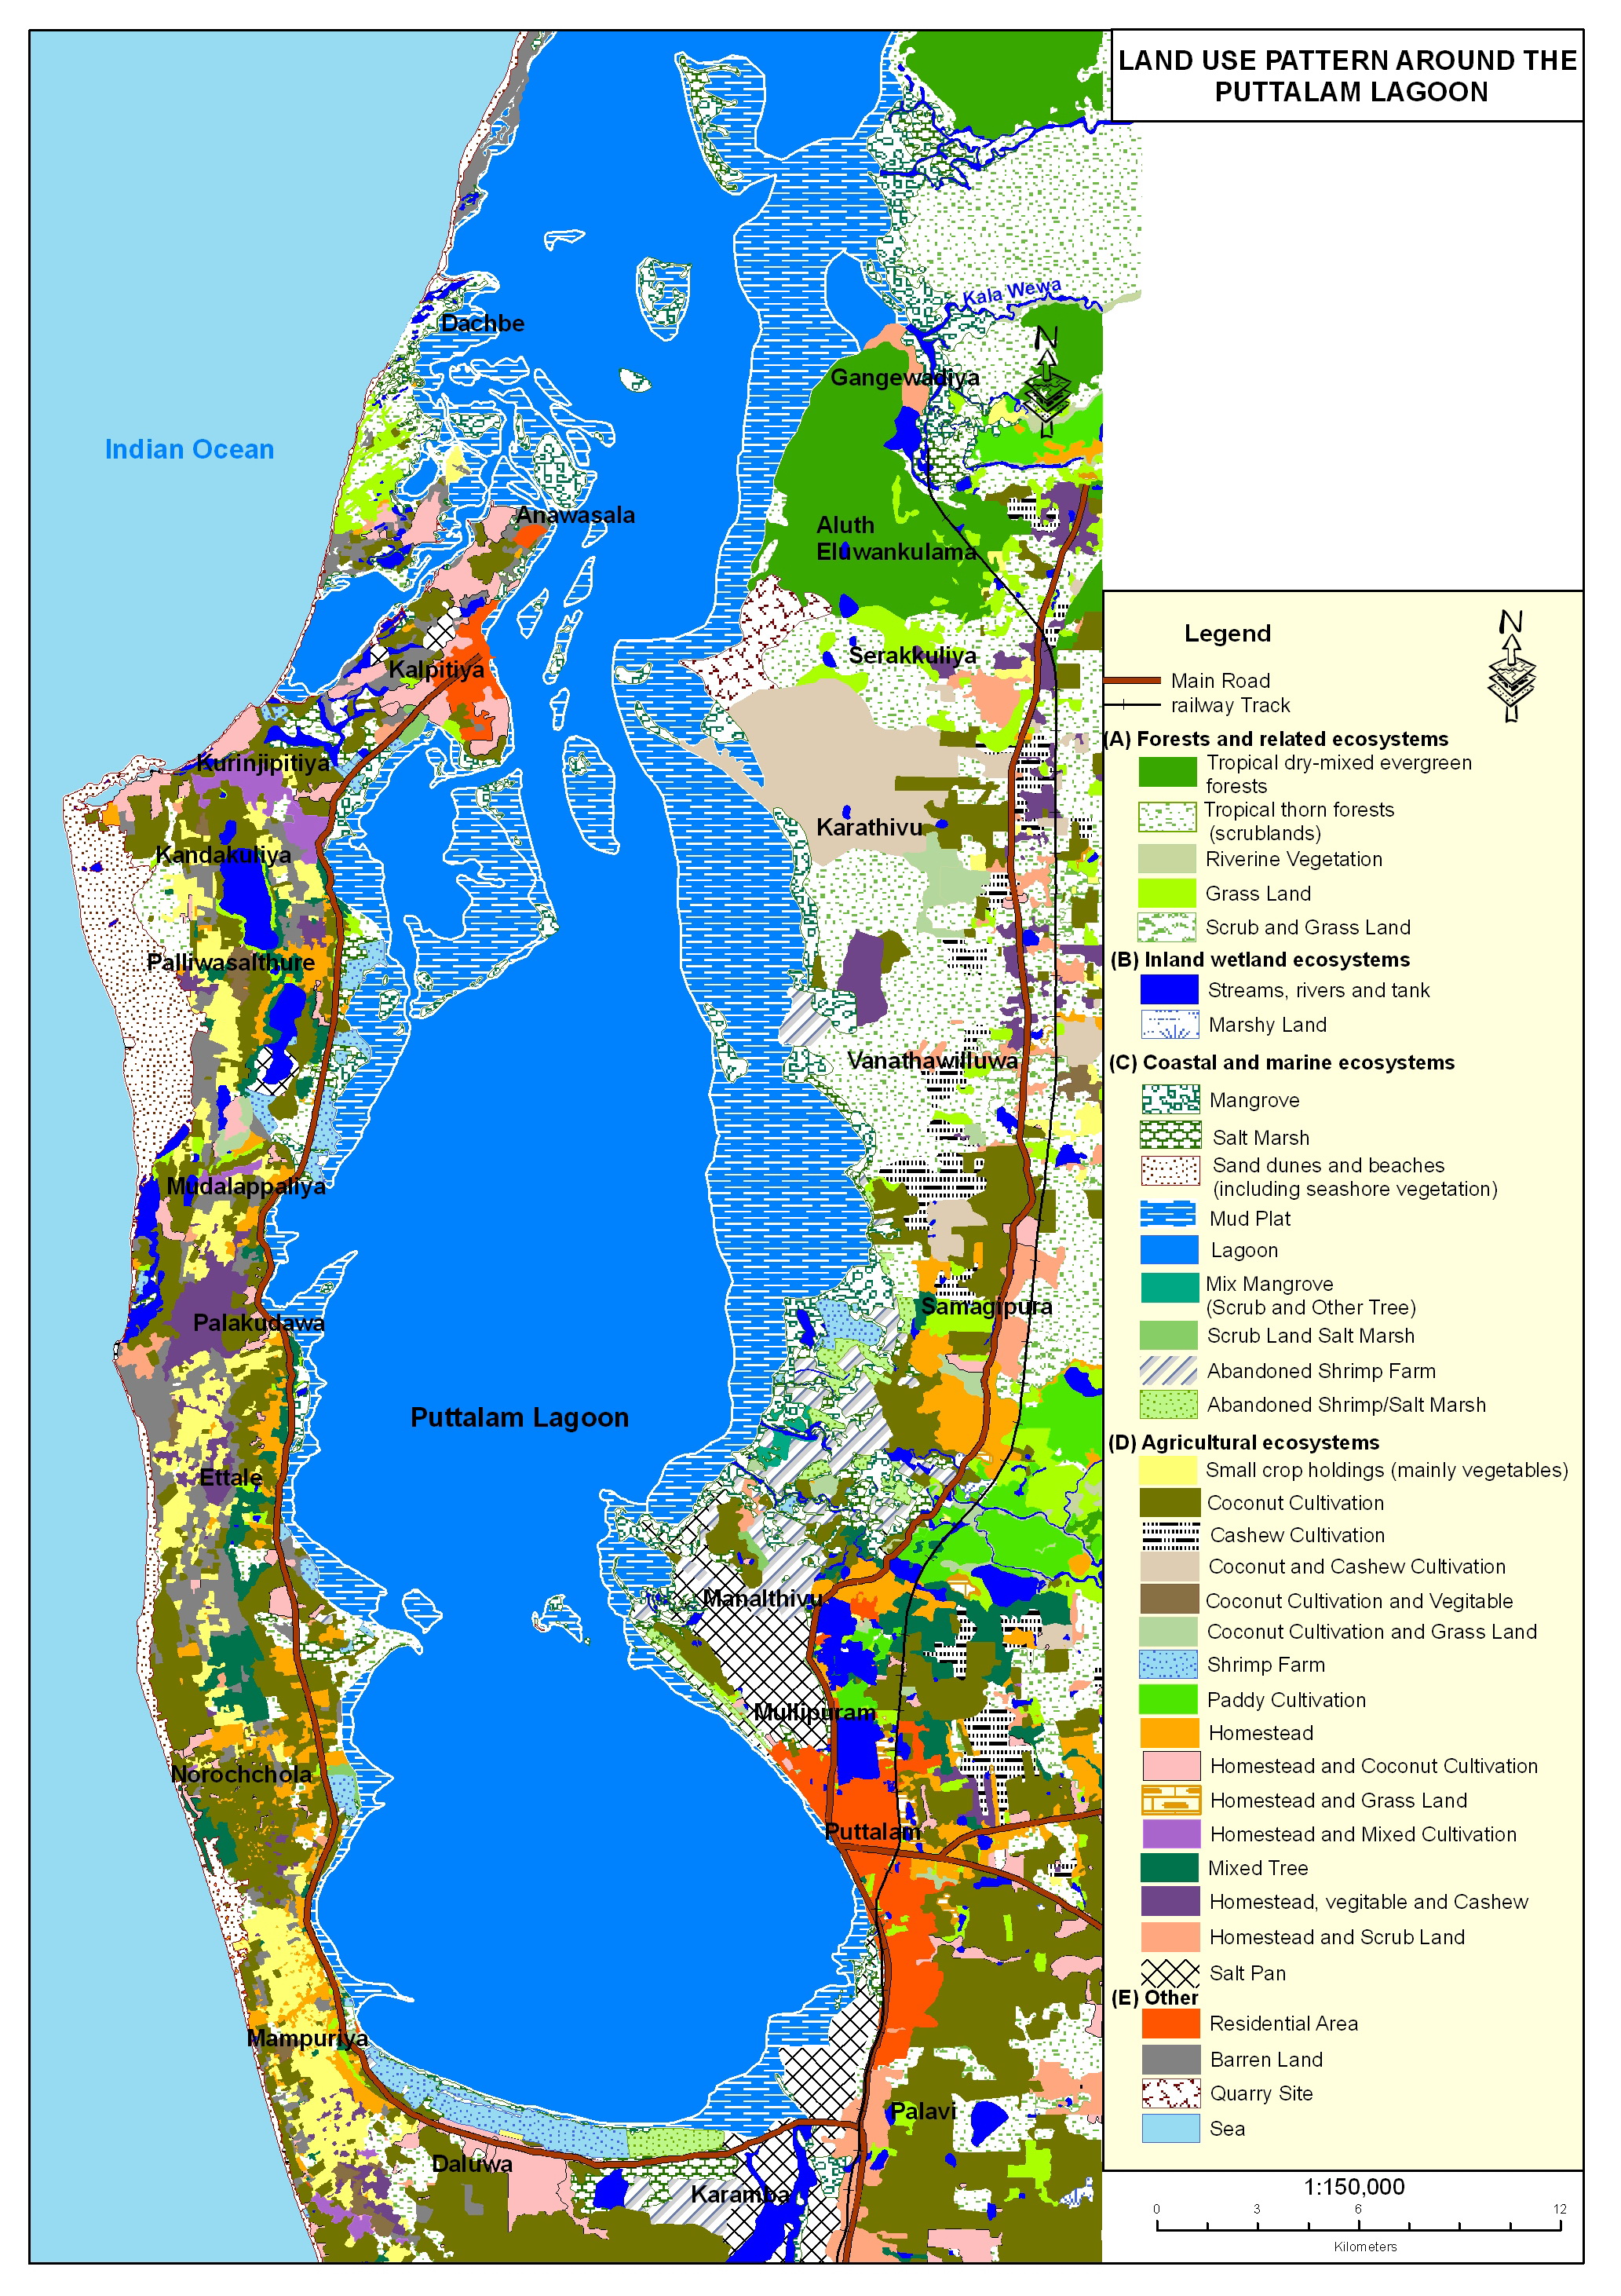 Land Use Pattern around Puttalam Lagoon 2009 ?